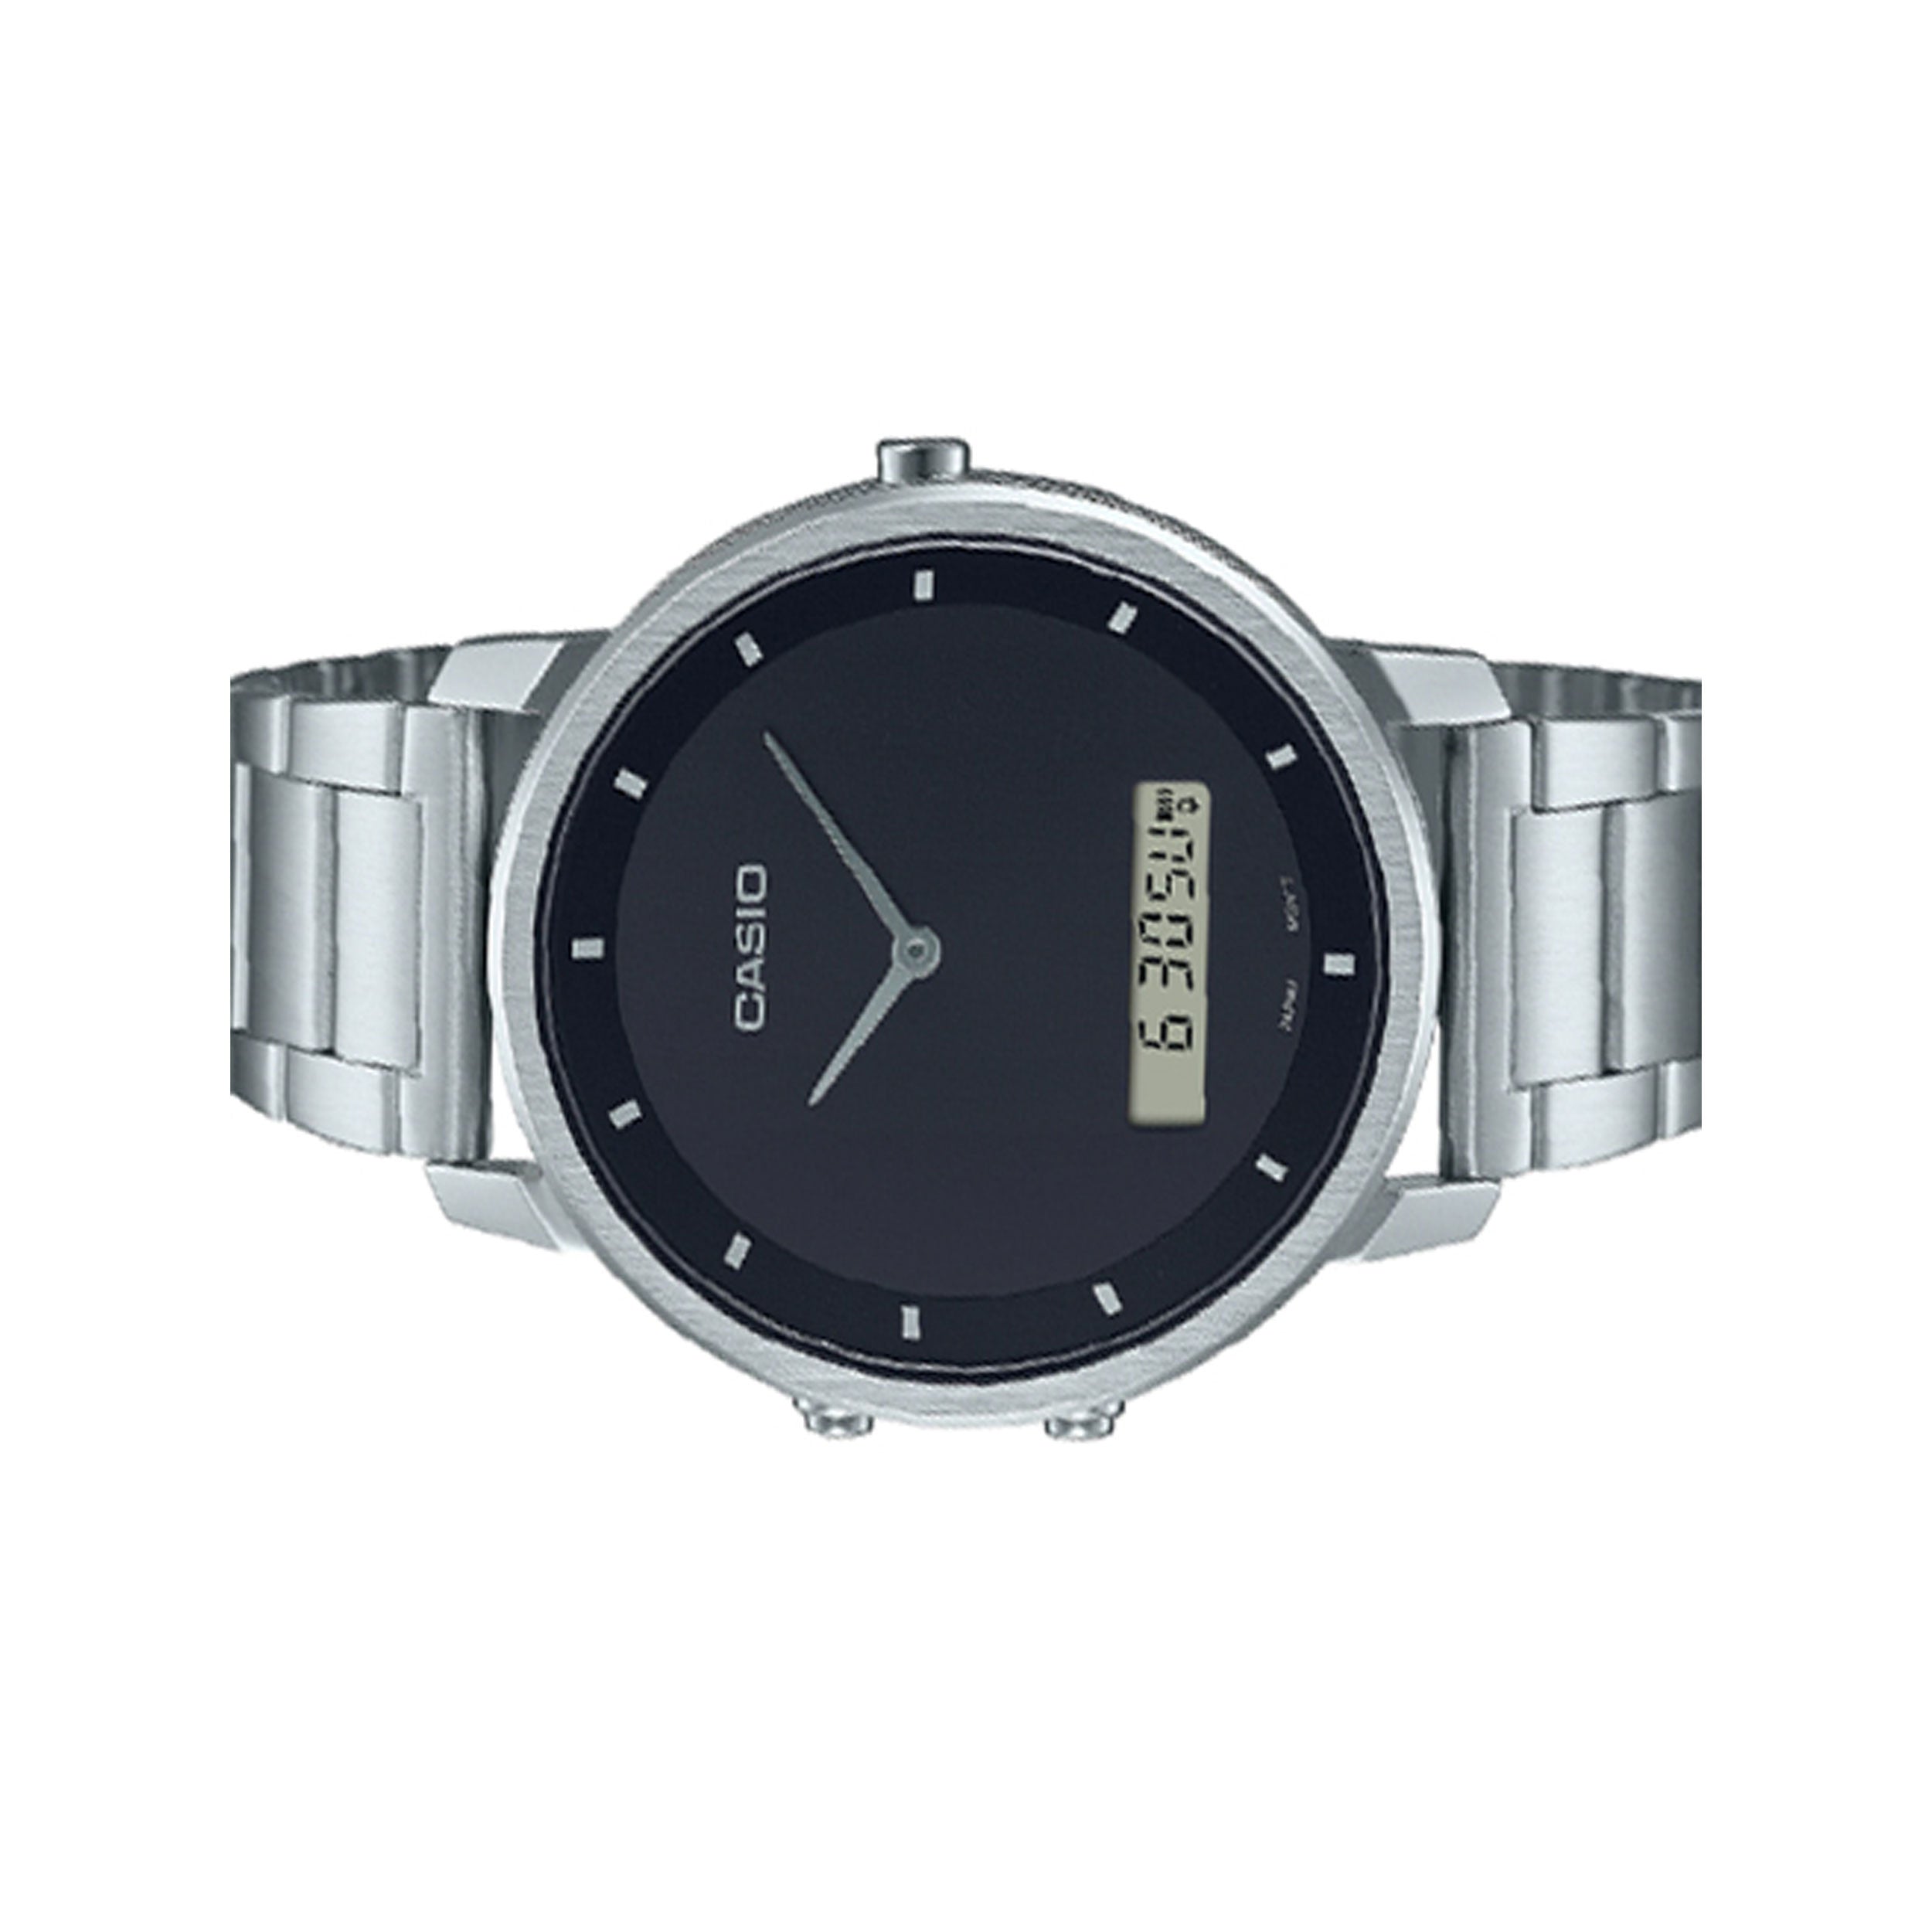 Casio Enticer MTP-B200D-1EDF Black Dial Men's Watch